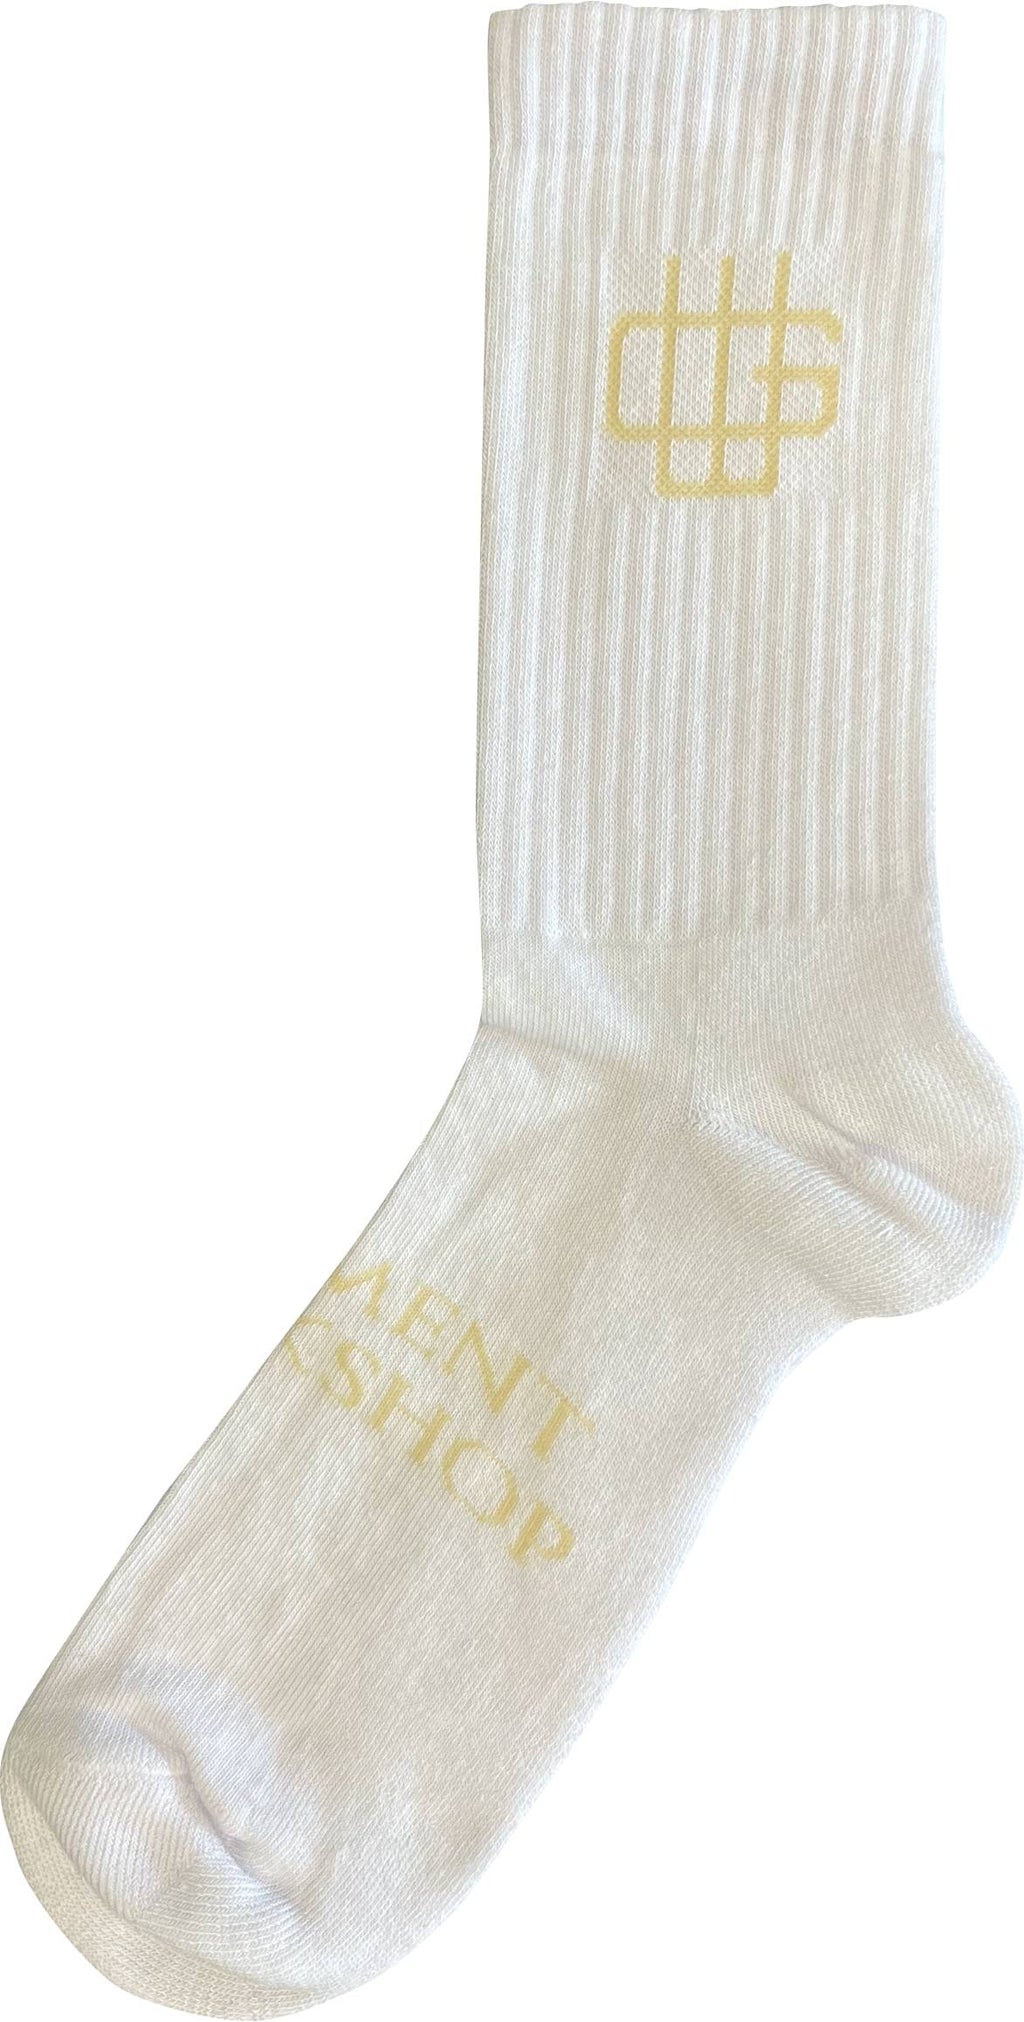  Garment Workshop Calze Socks Unisex White Bianco Uomo - 2